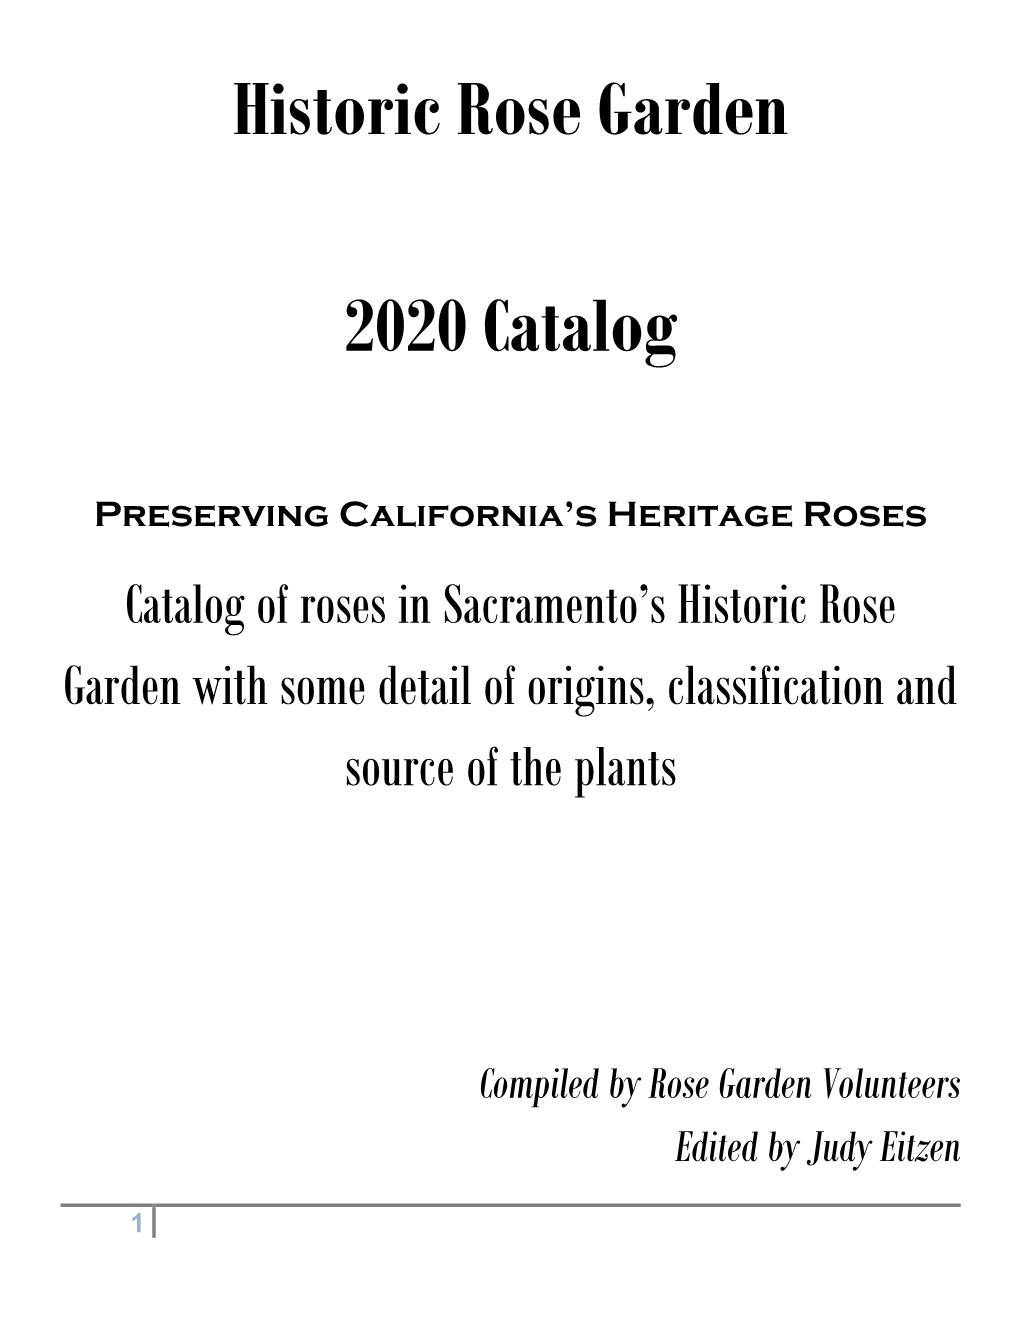 Historic Rose Garden Catalog Introduction April 2020